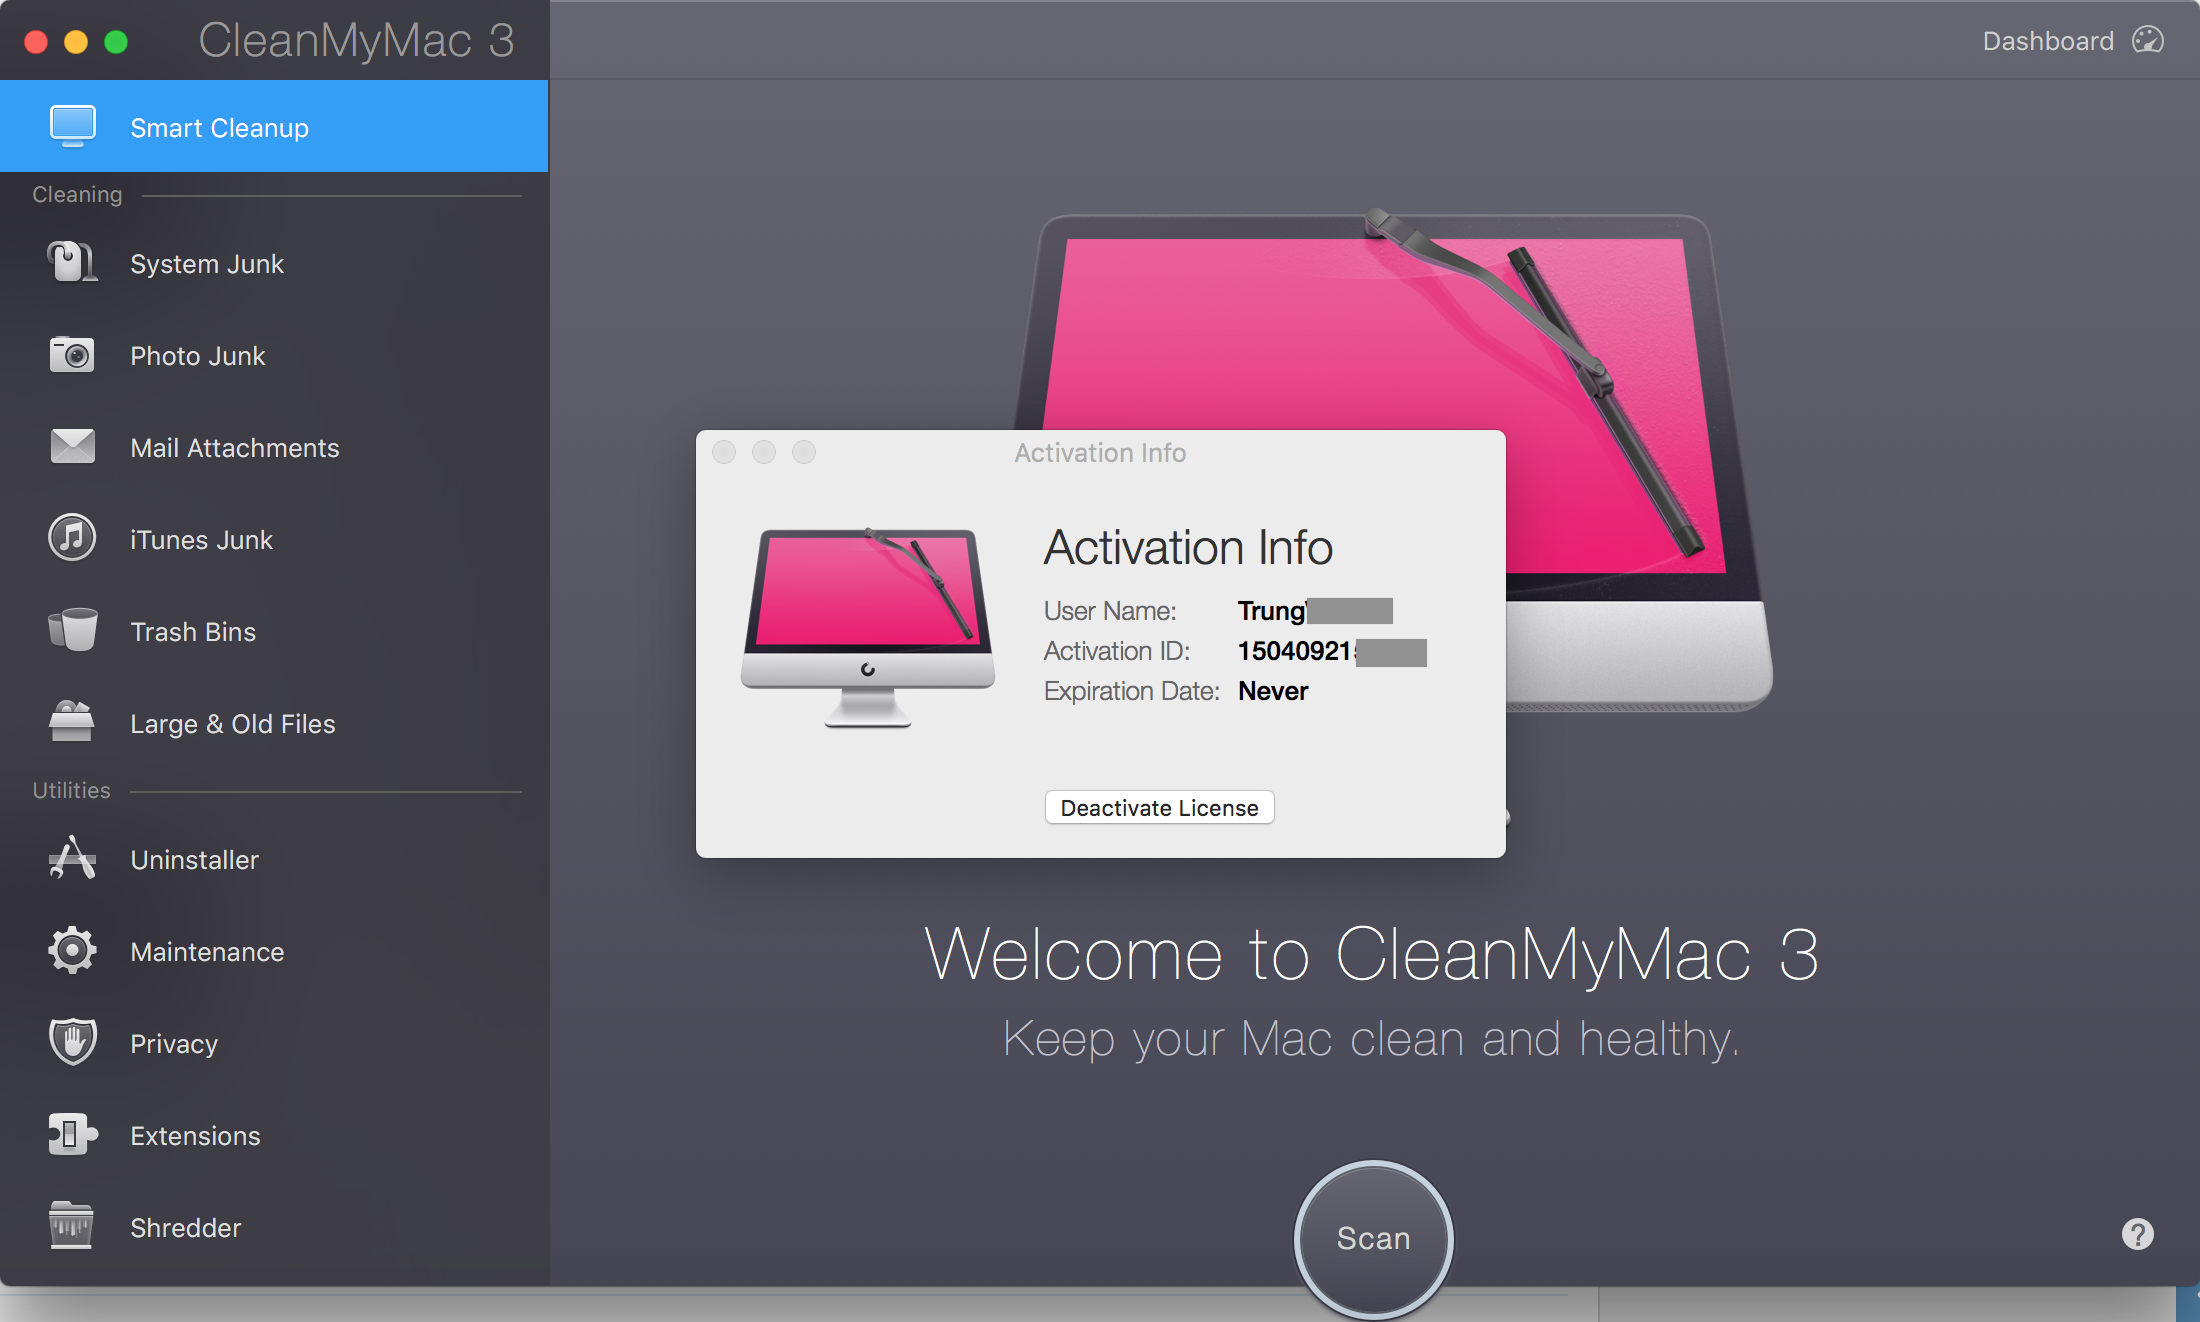 CLEANMYMAC активационный номер. Clean my Mac x активационный номер. Активация clean my Mac x. Активационный номер для CLEANMYMAC X.